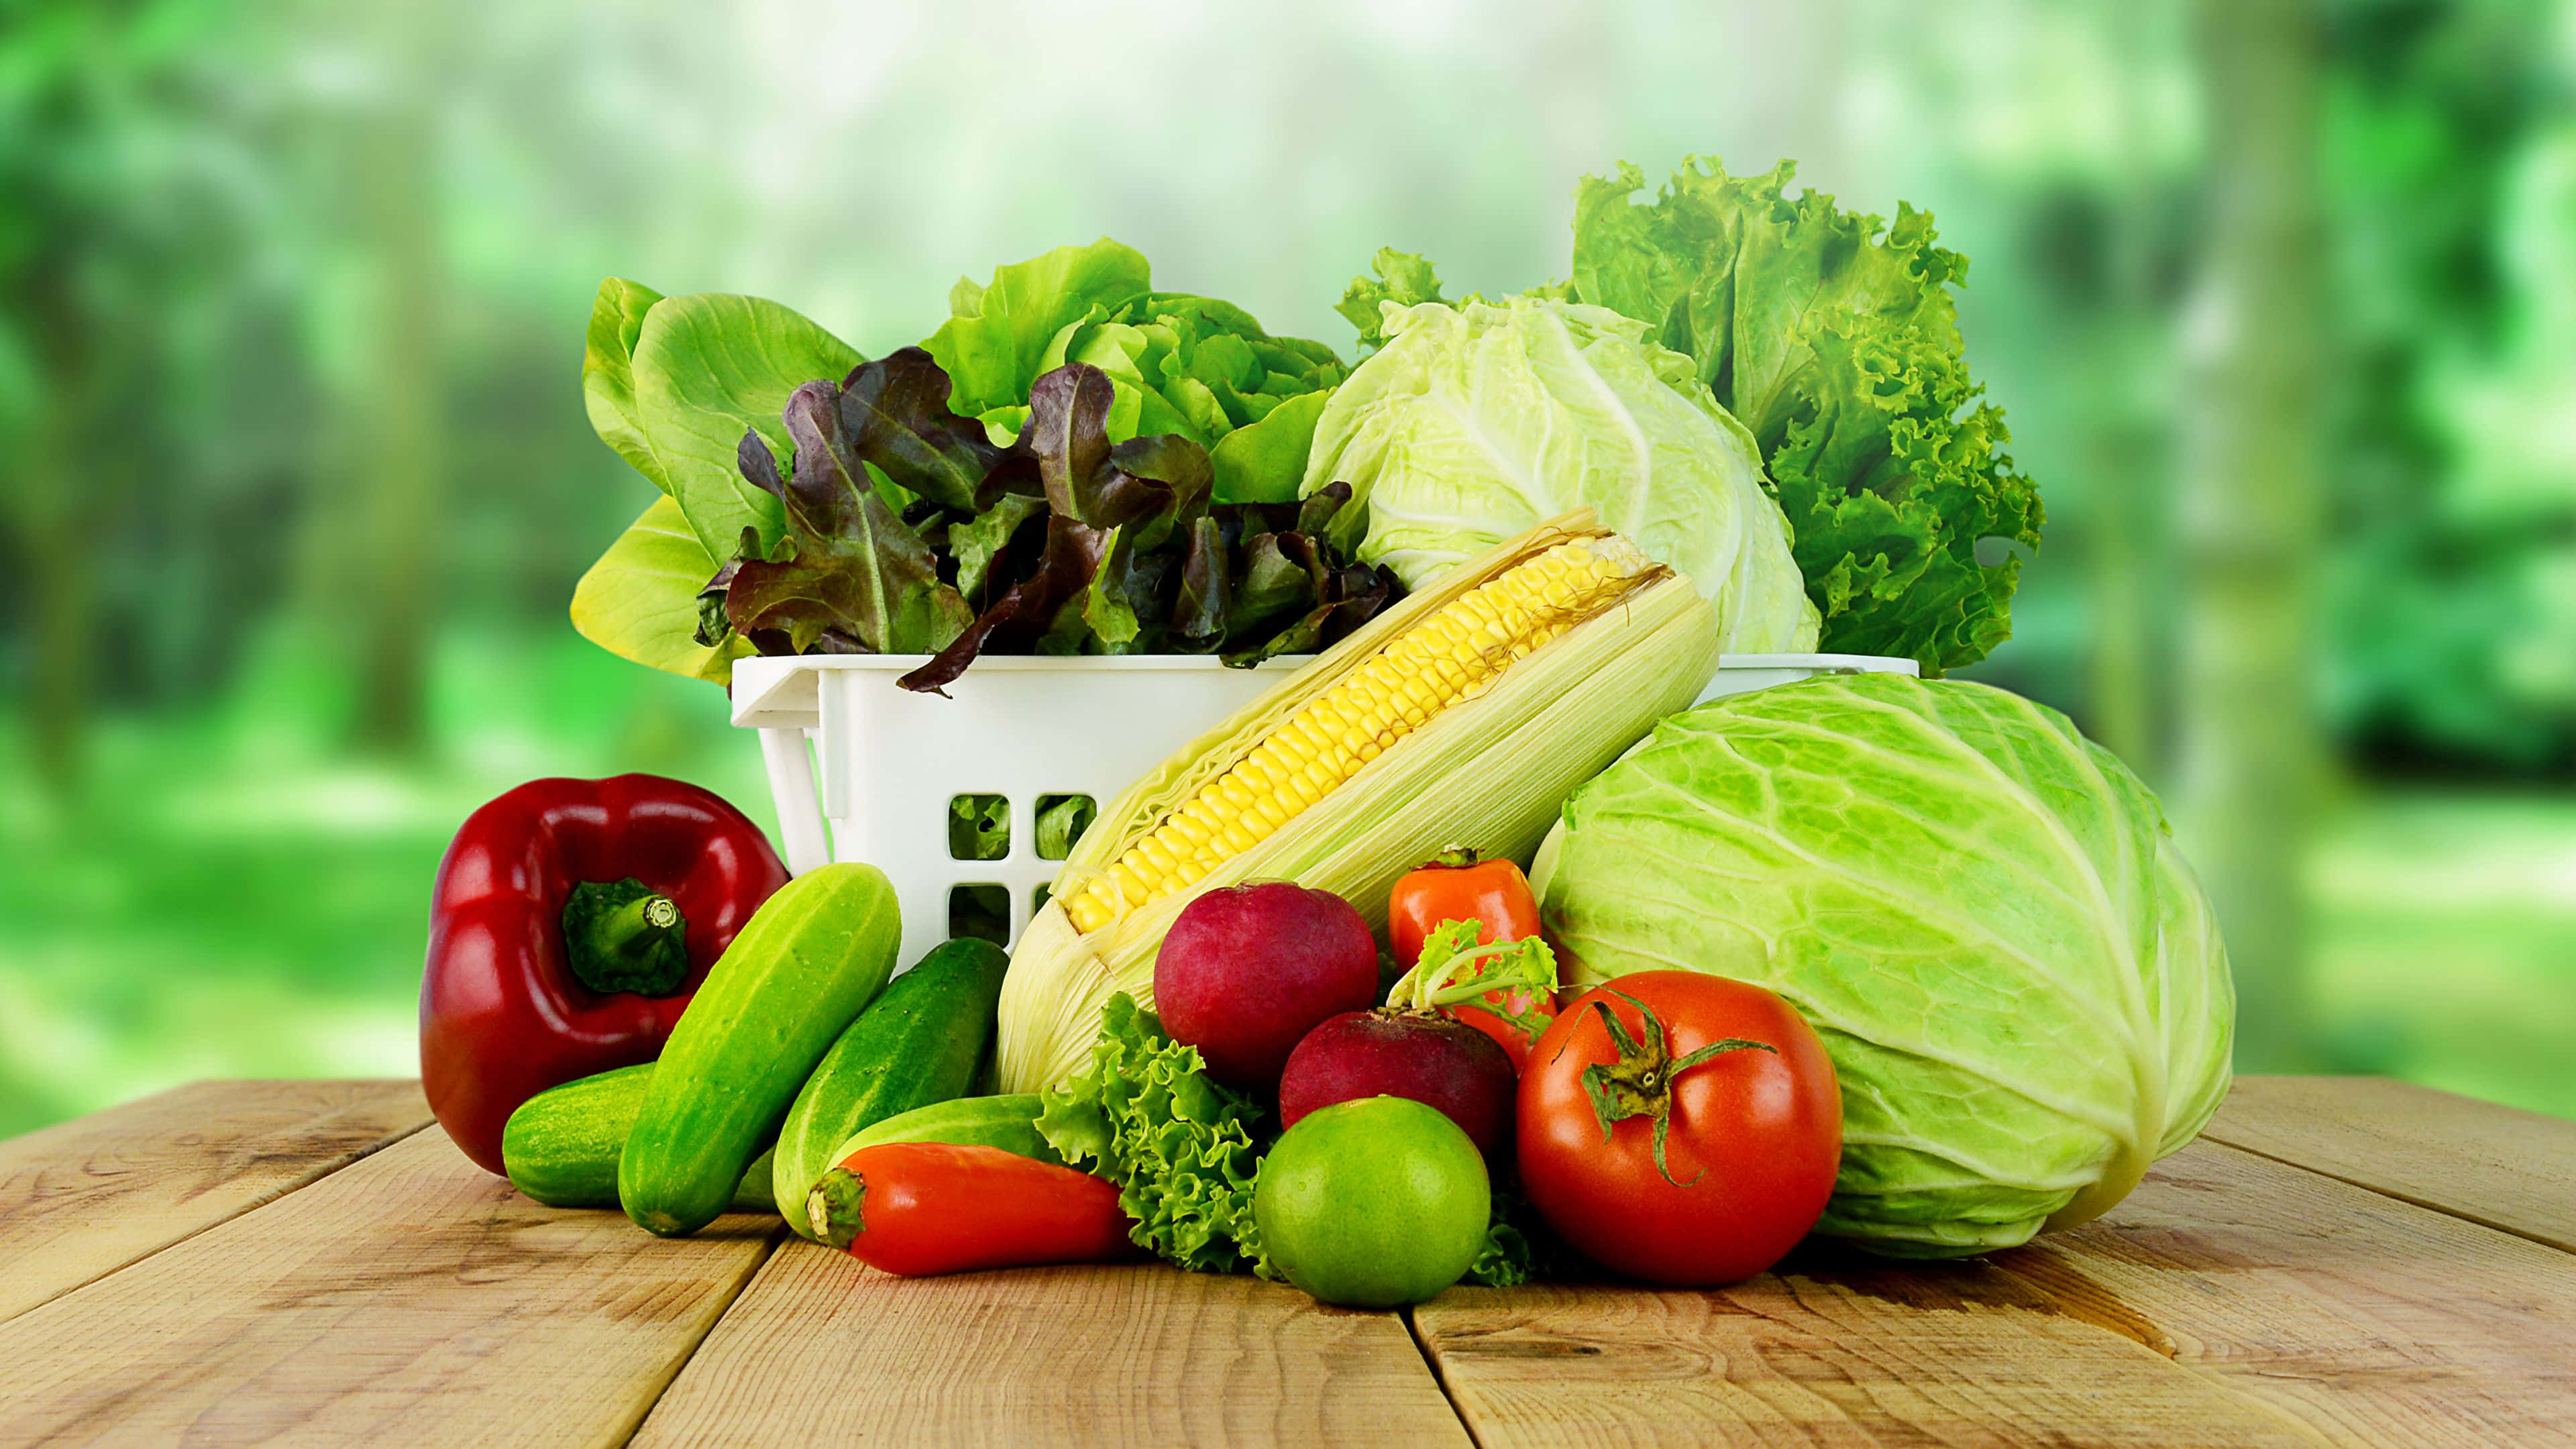 Vegetables On Plastic Basket Picture